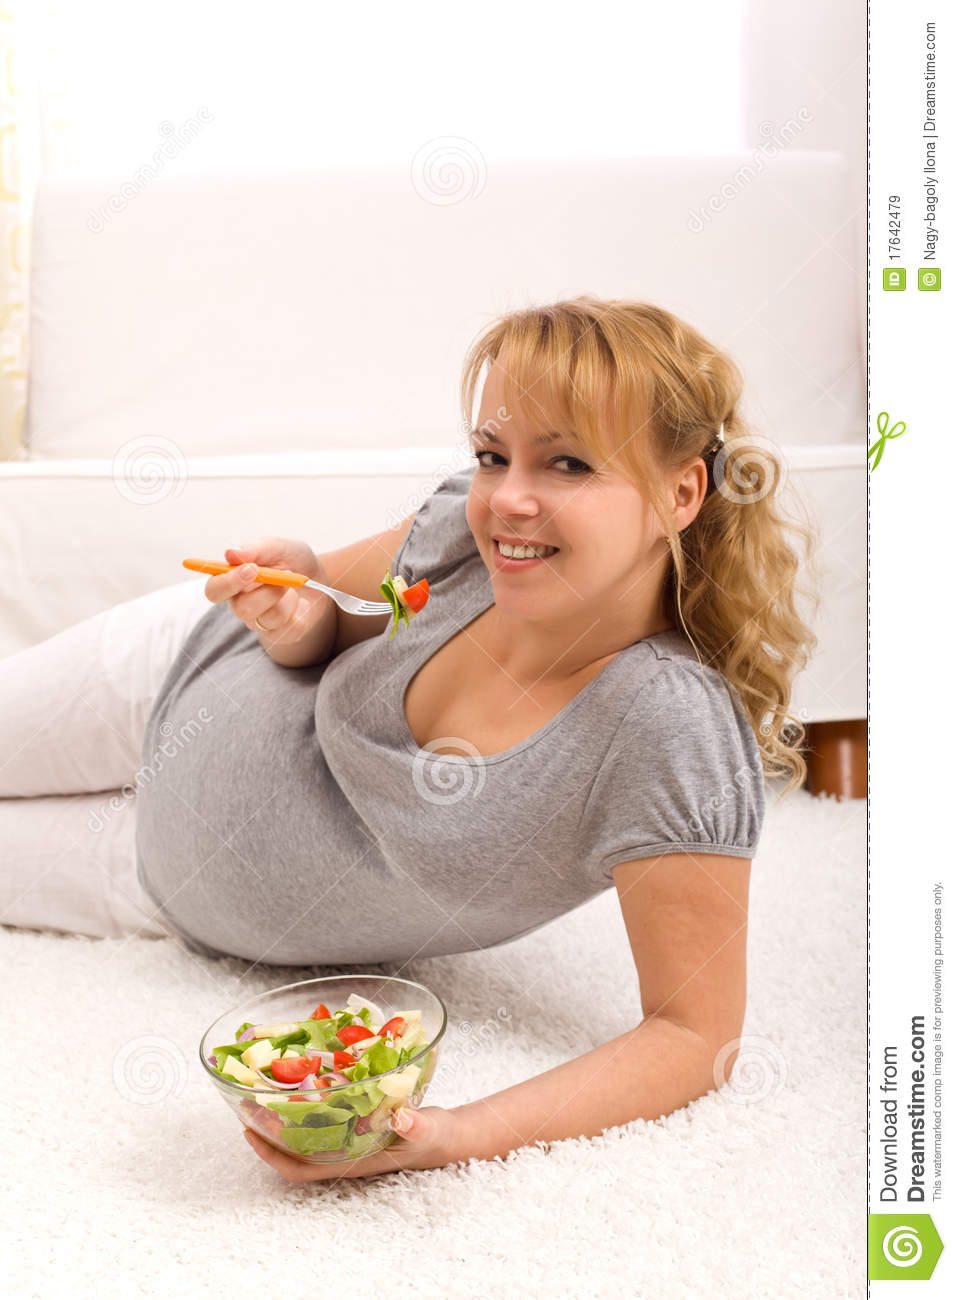 Beautiful Pregnant Woman Eating Fresh Salad Royalty Free Stock Images